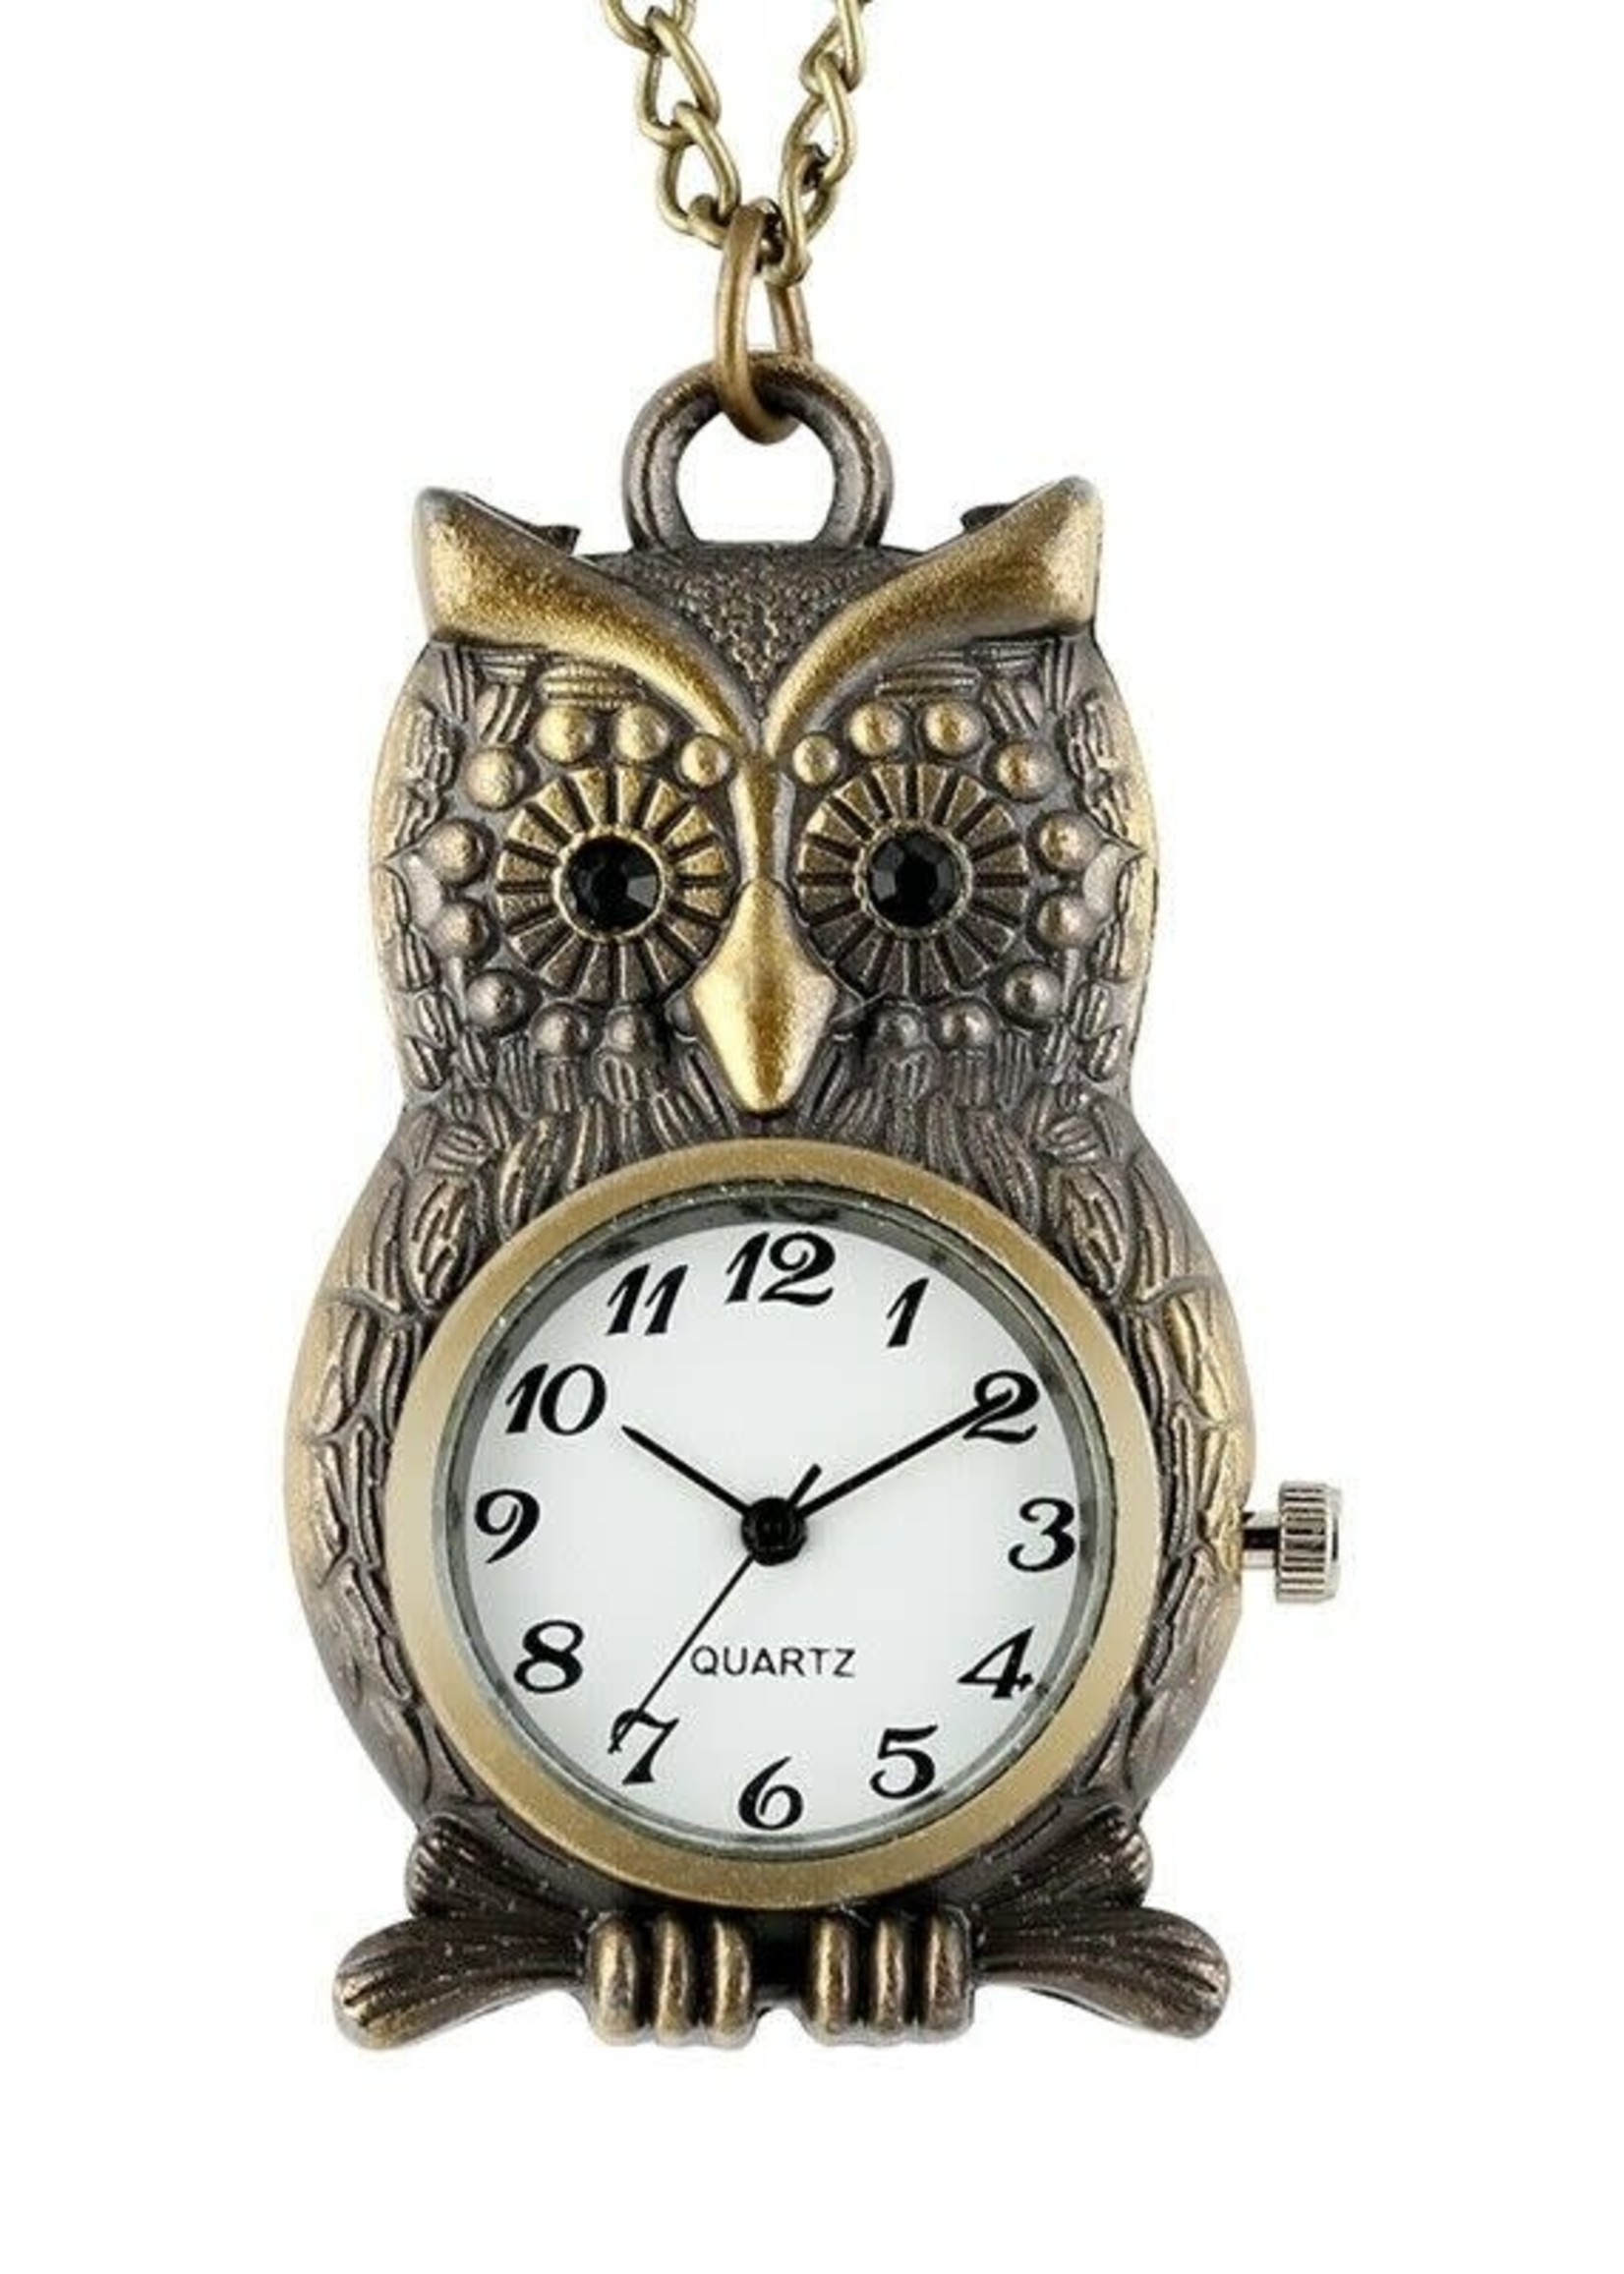 Perched Owl Antique Bronze Pocket Watch Necklace